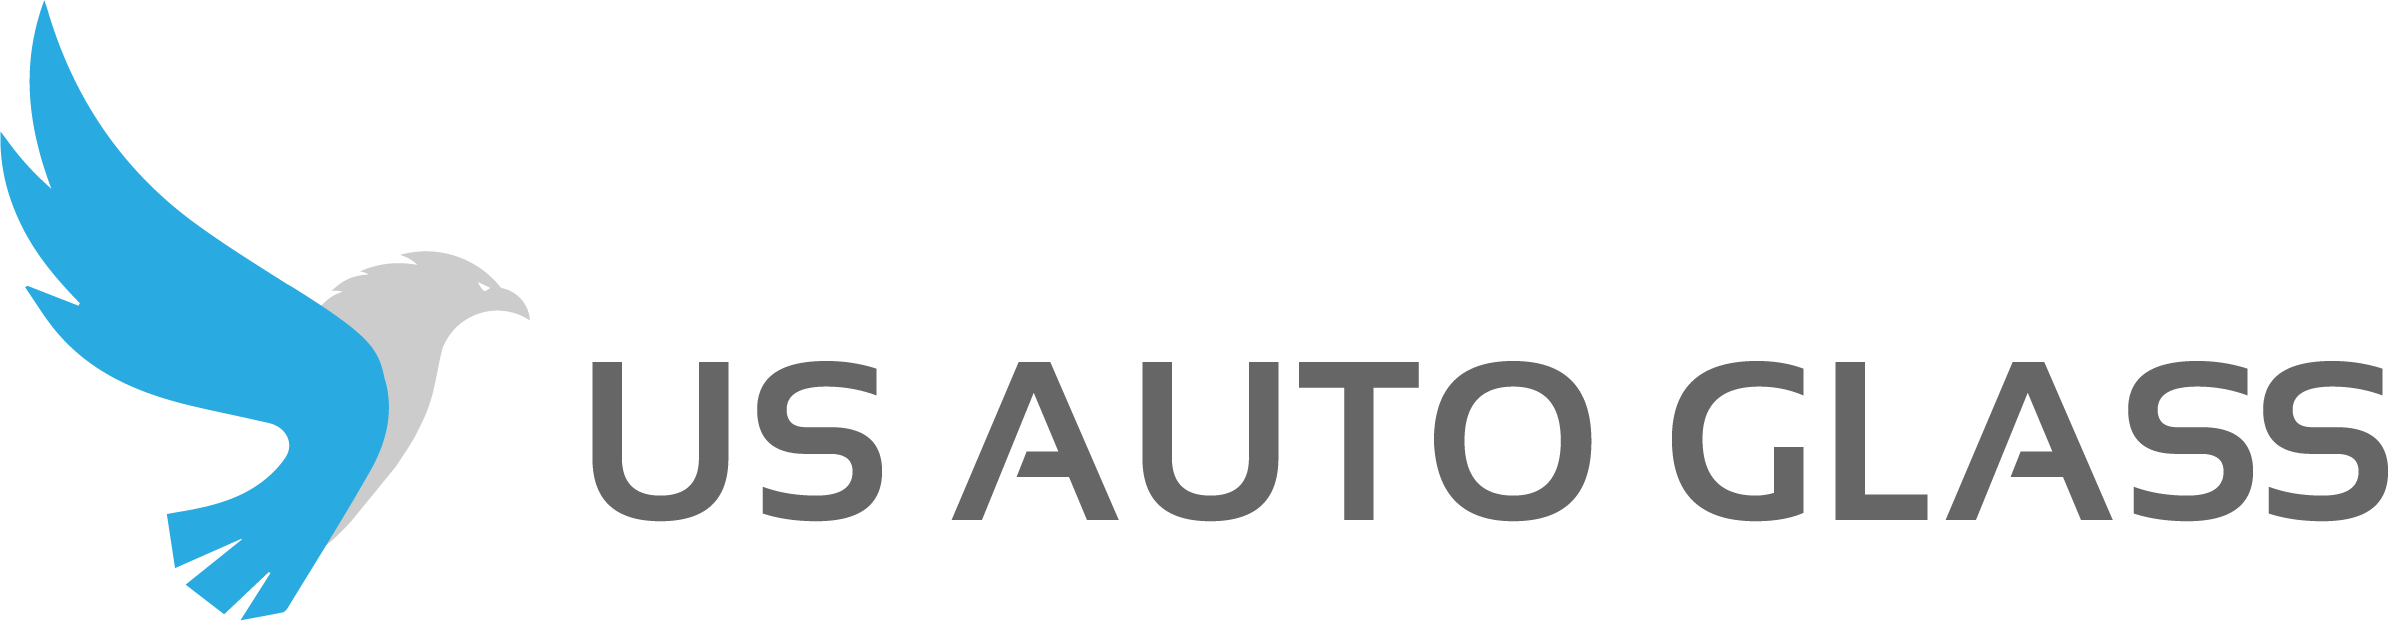 US Auto Glass logo